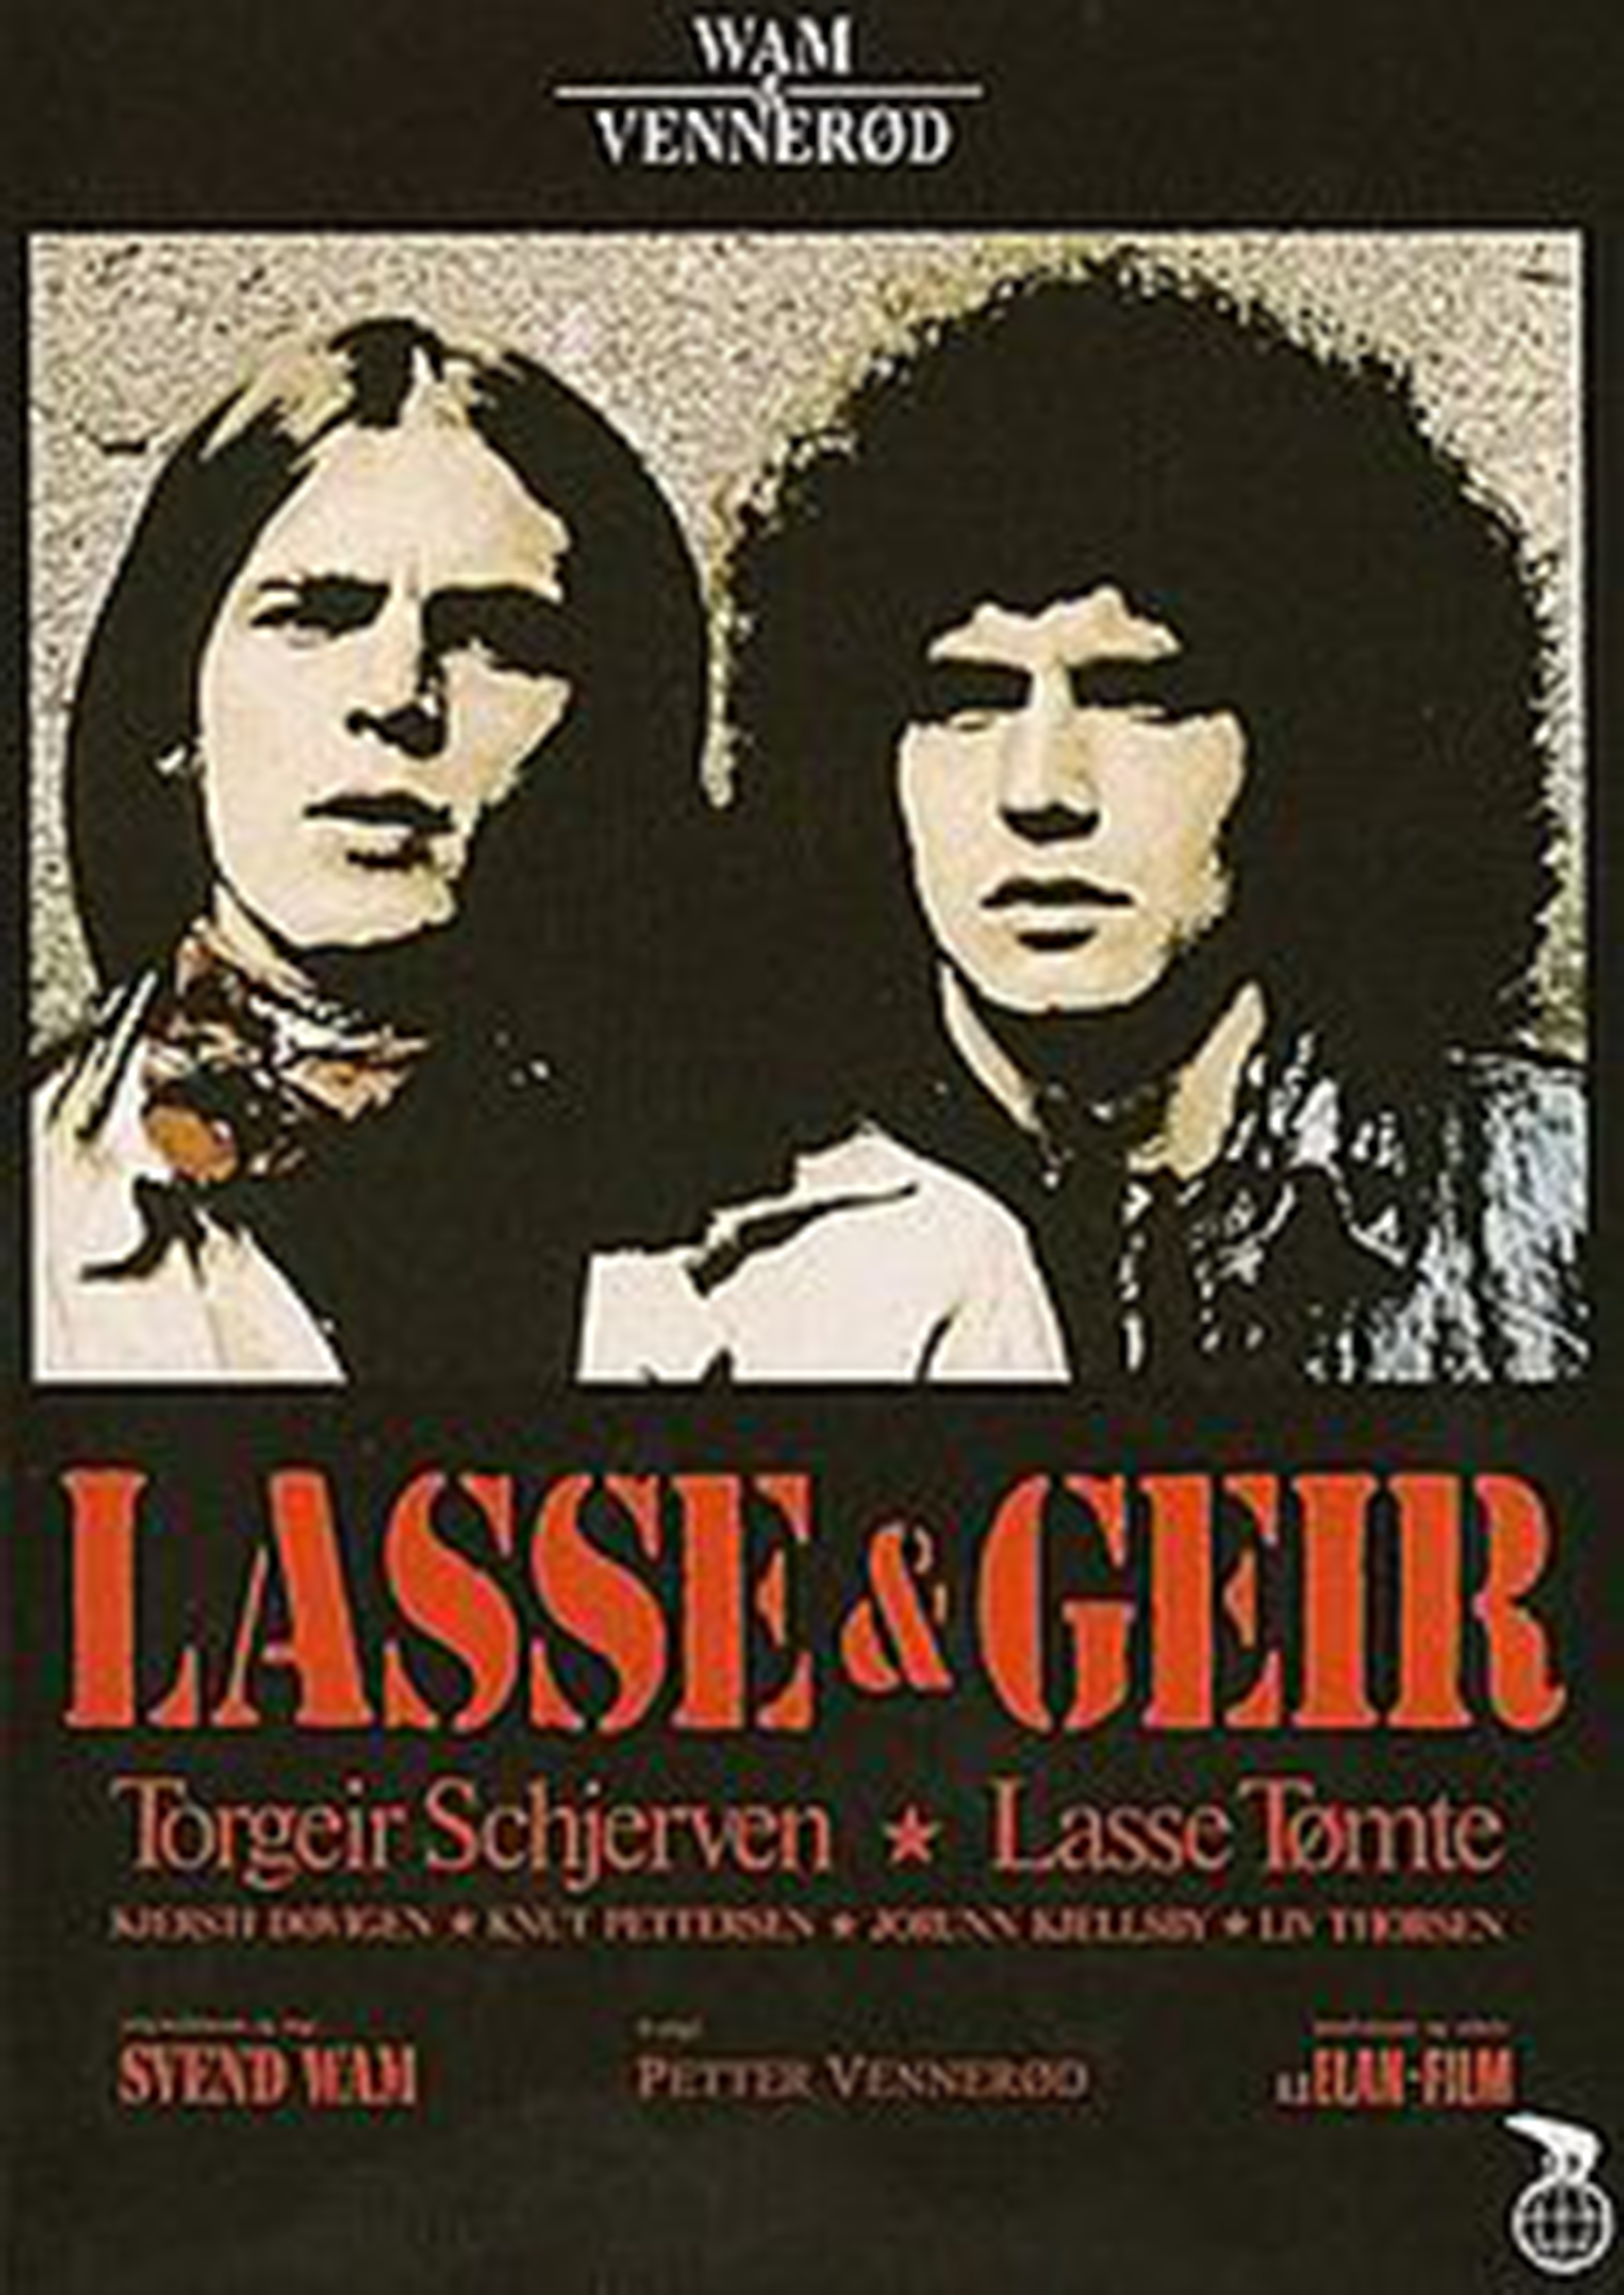 Lasse & Geir (1976) Screenshot 4